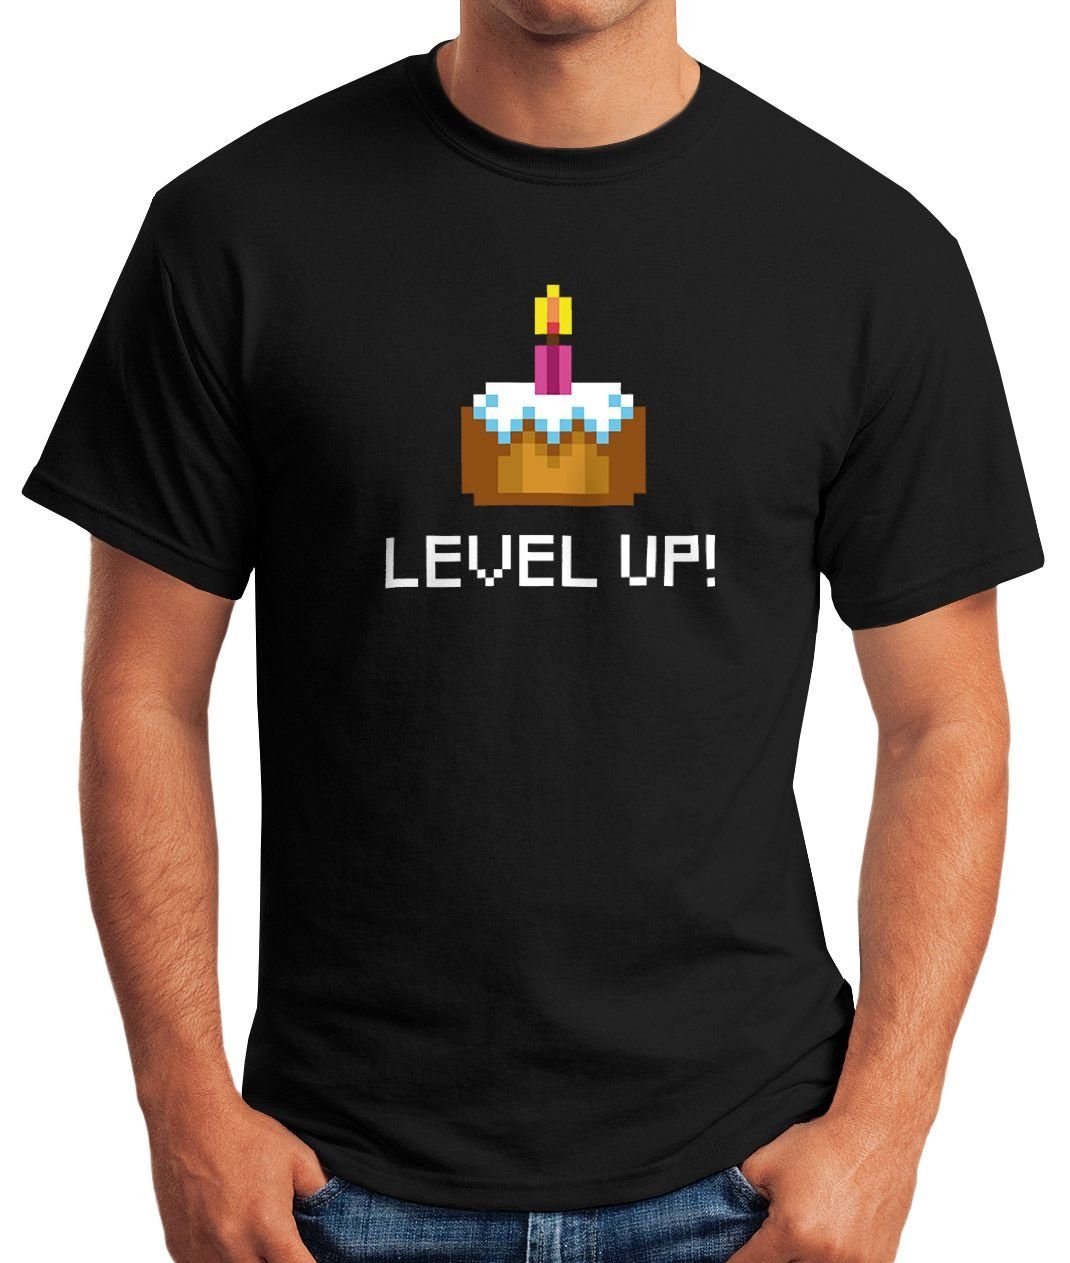 schwarz Pixel-Torte T-Shirt Geburtstag Moonworks® Fun-Shirt Print Up Pixelgrafik Herren mit Level Print-Shirt Gamer MoonWorks Retro Arcade Geschenk